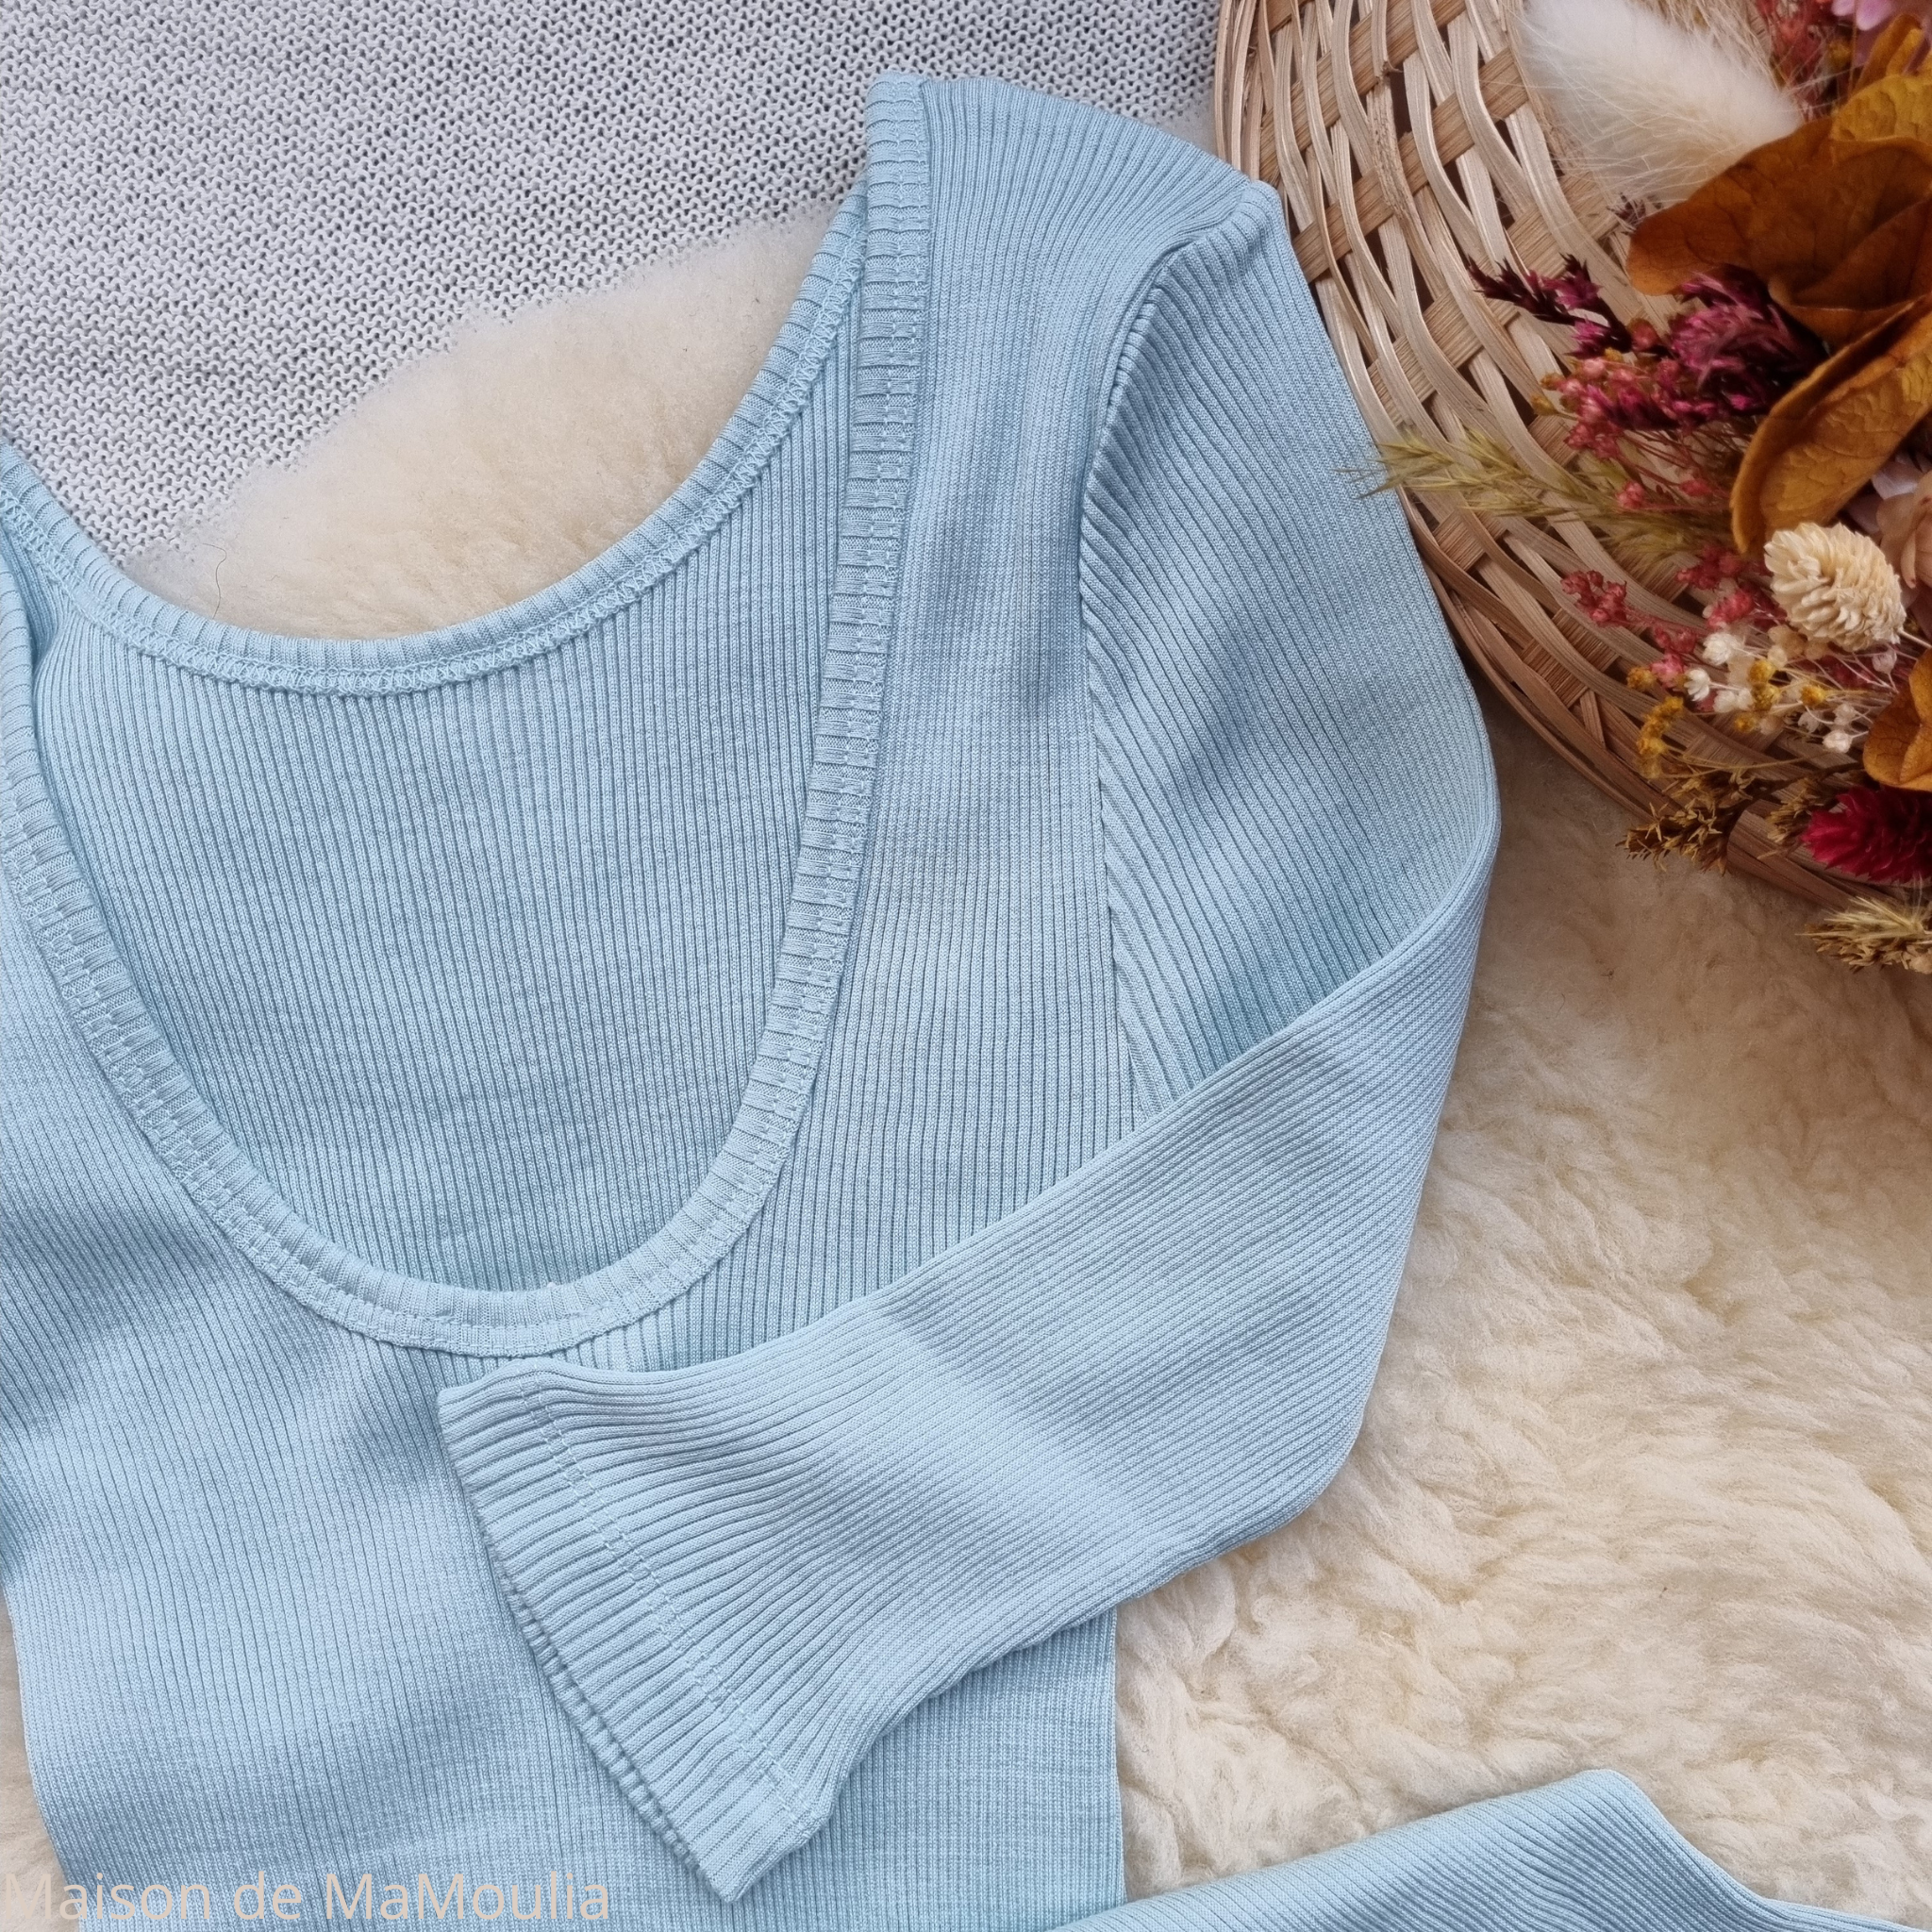 minimalisma-gym- tshirt-top-manches-courtes-34-soie-coton-femme-maison-de-mamoulia-Waterfall-bleu- clair